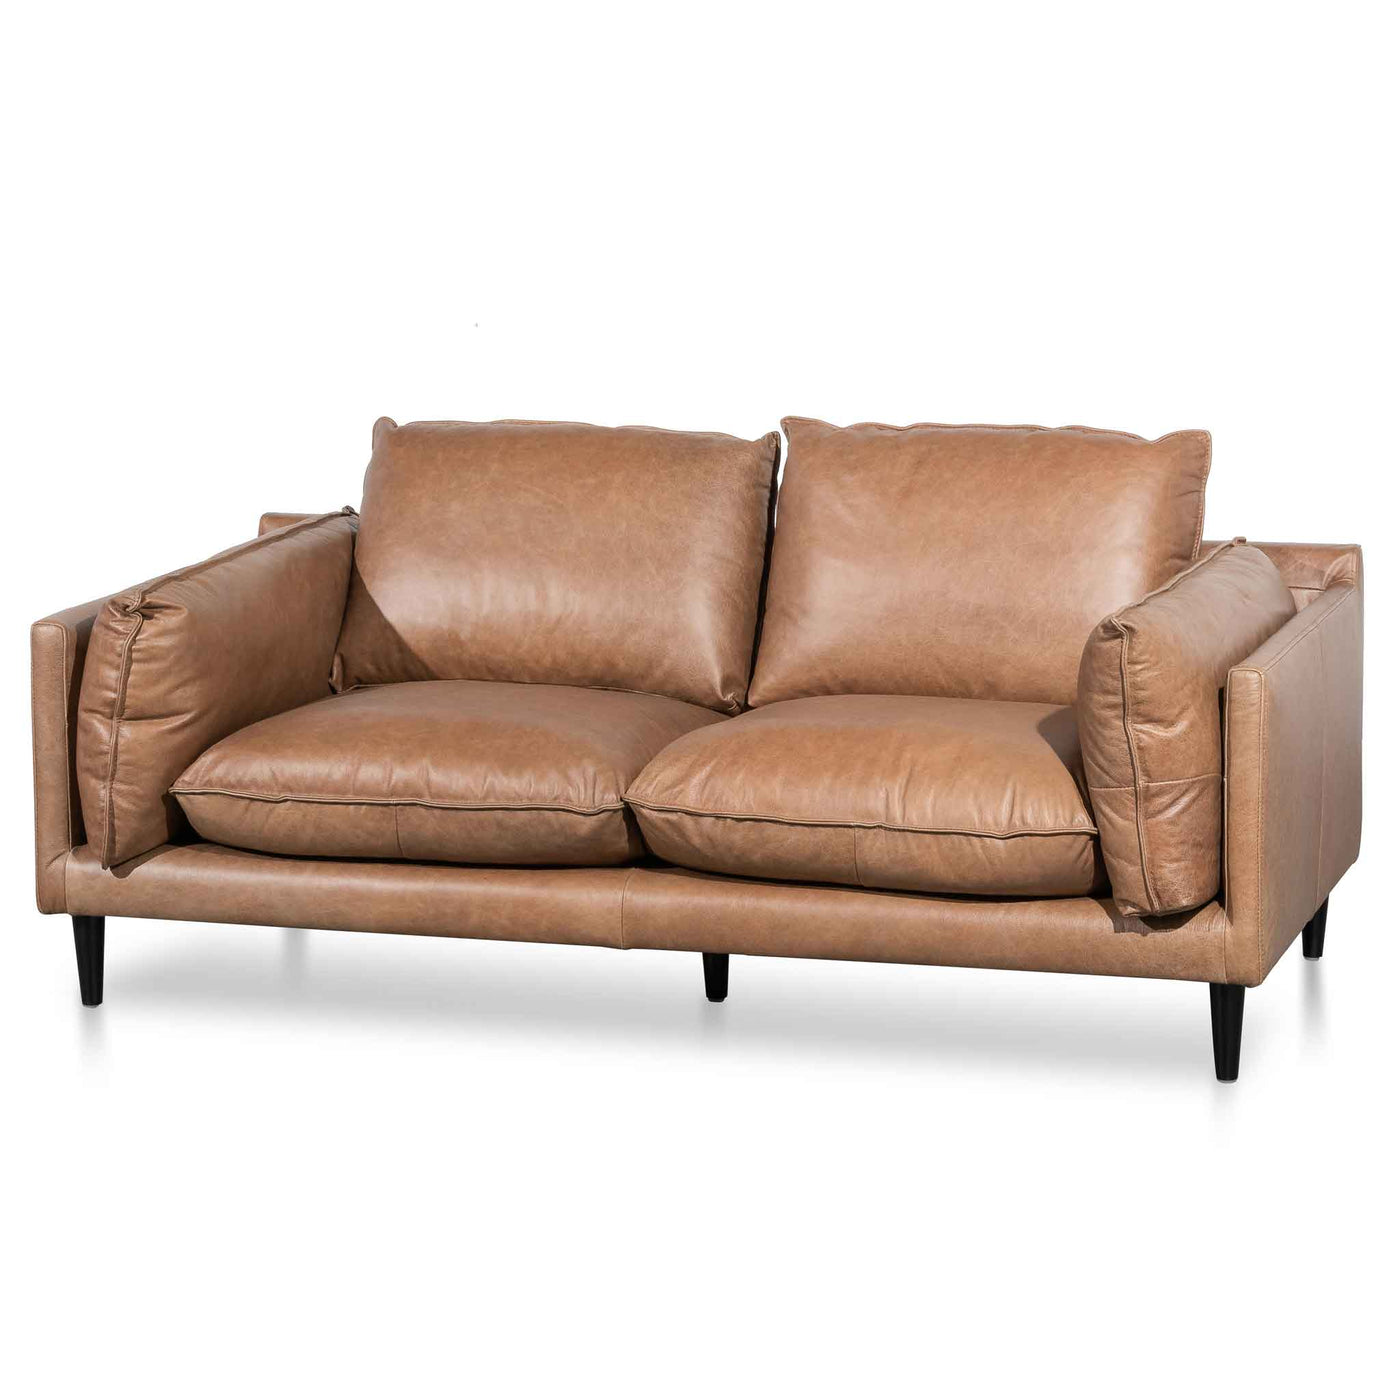 2 Seater Leather Sofa - Saddle Brown